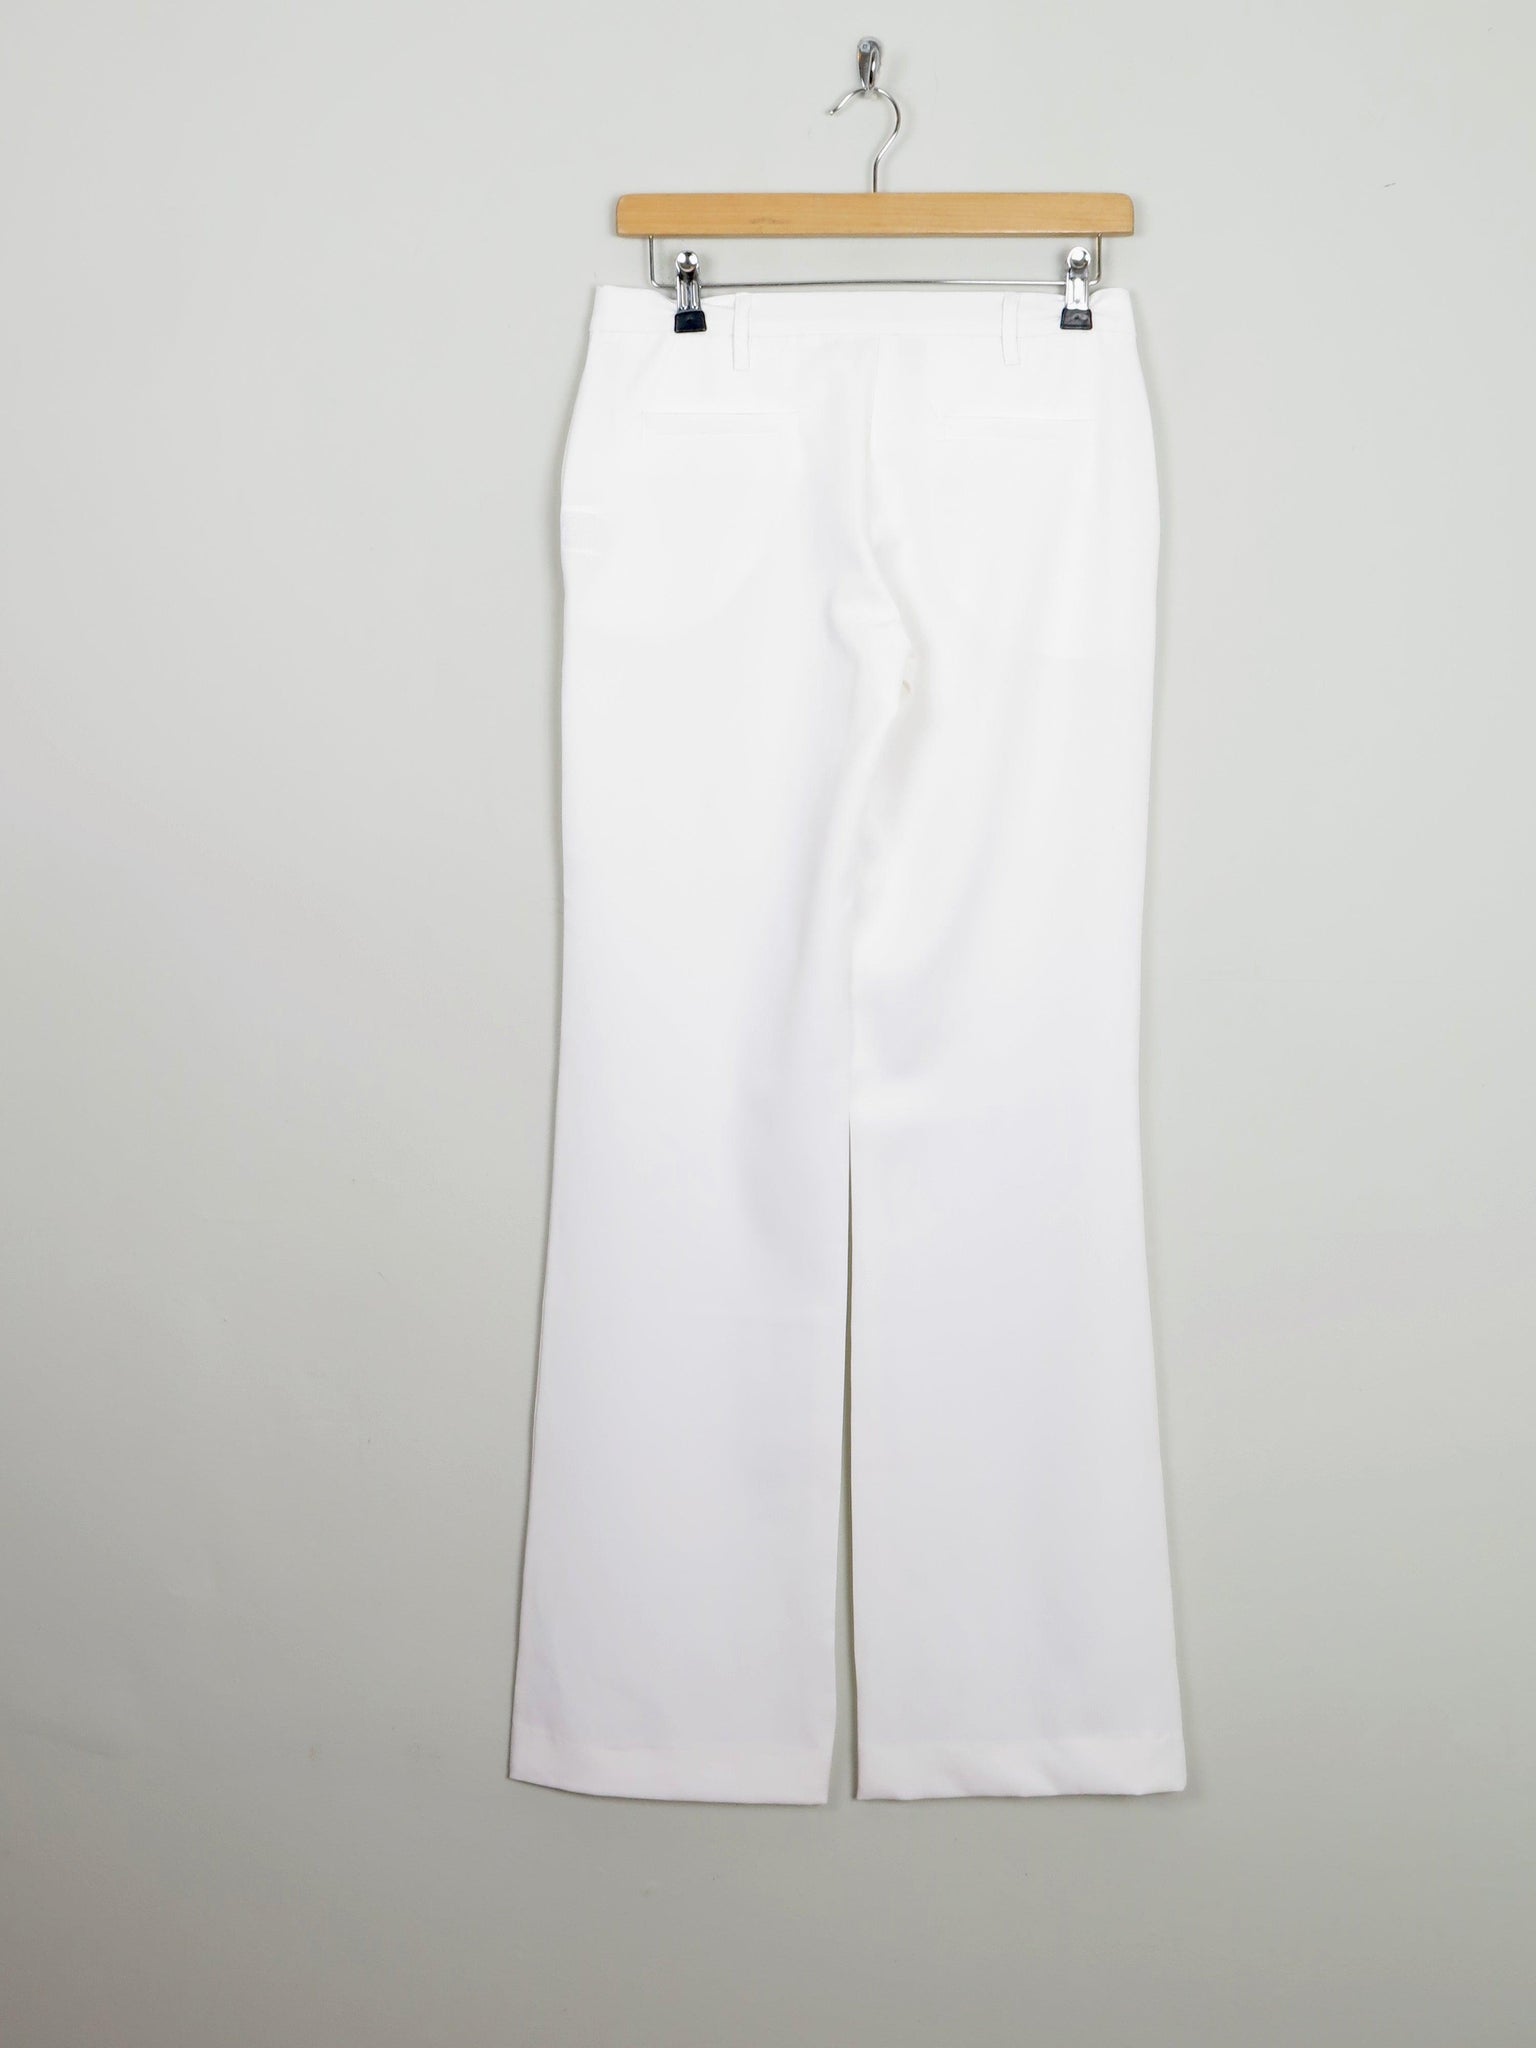 Women's Italian Cream/Off White Boot Cut 90s Tailored Trousers 8/10 28W - The Harlequin